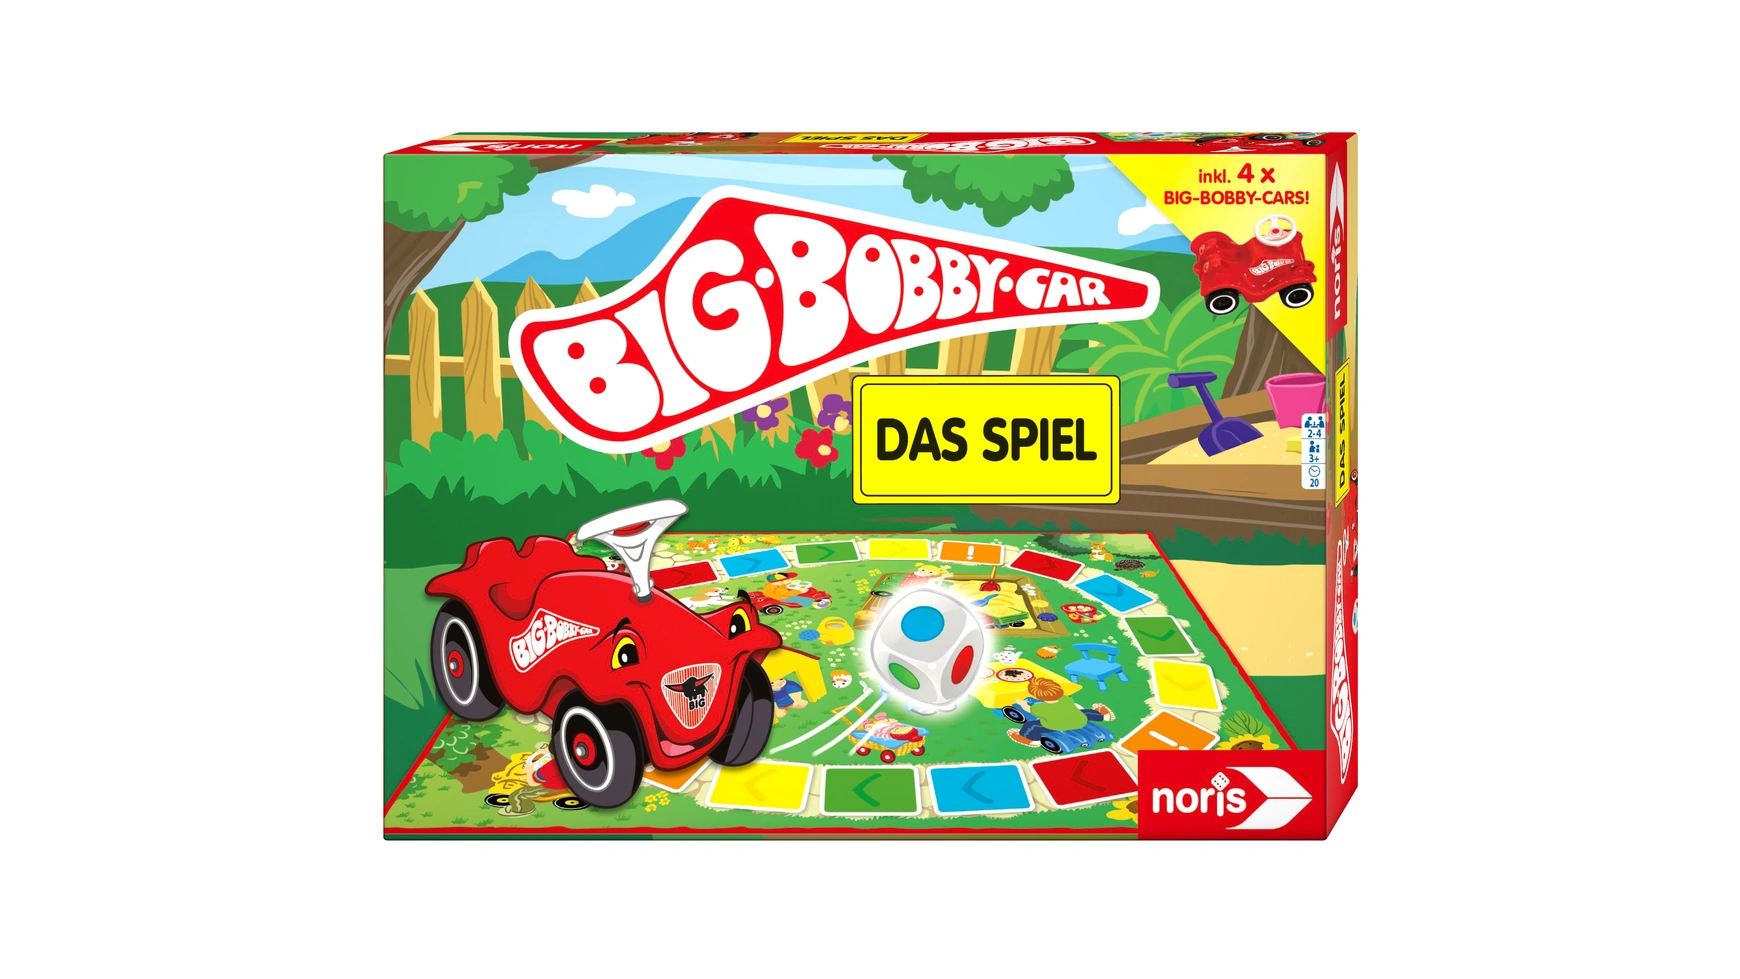 Big bobby car игра Noris Spiele цена и фото